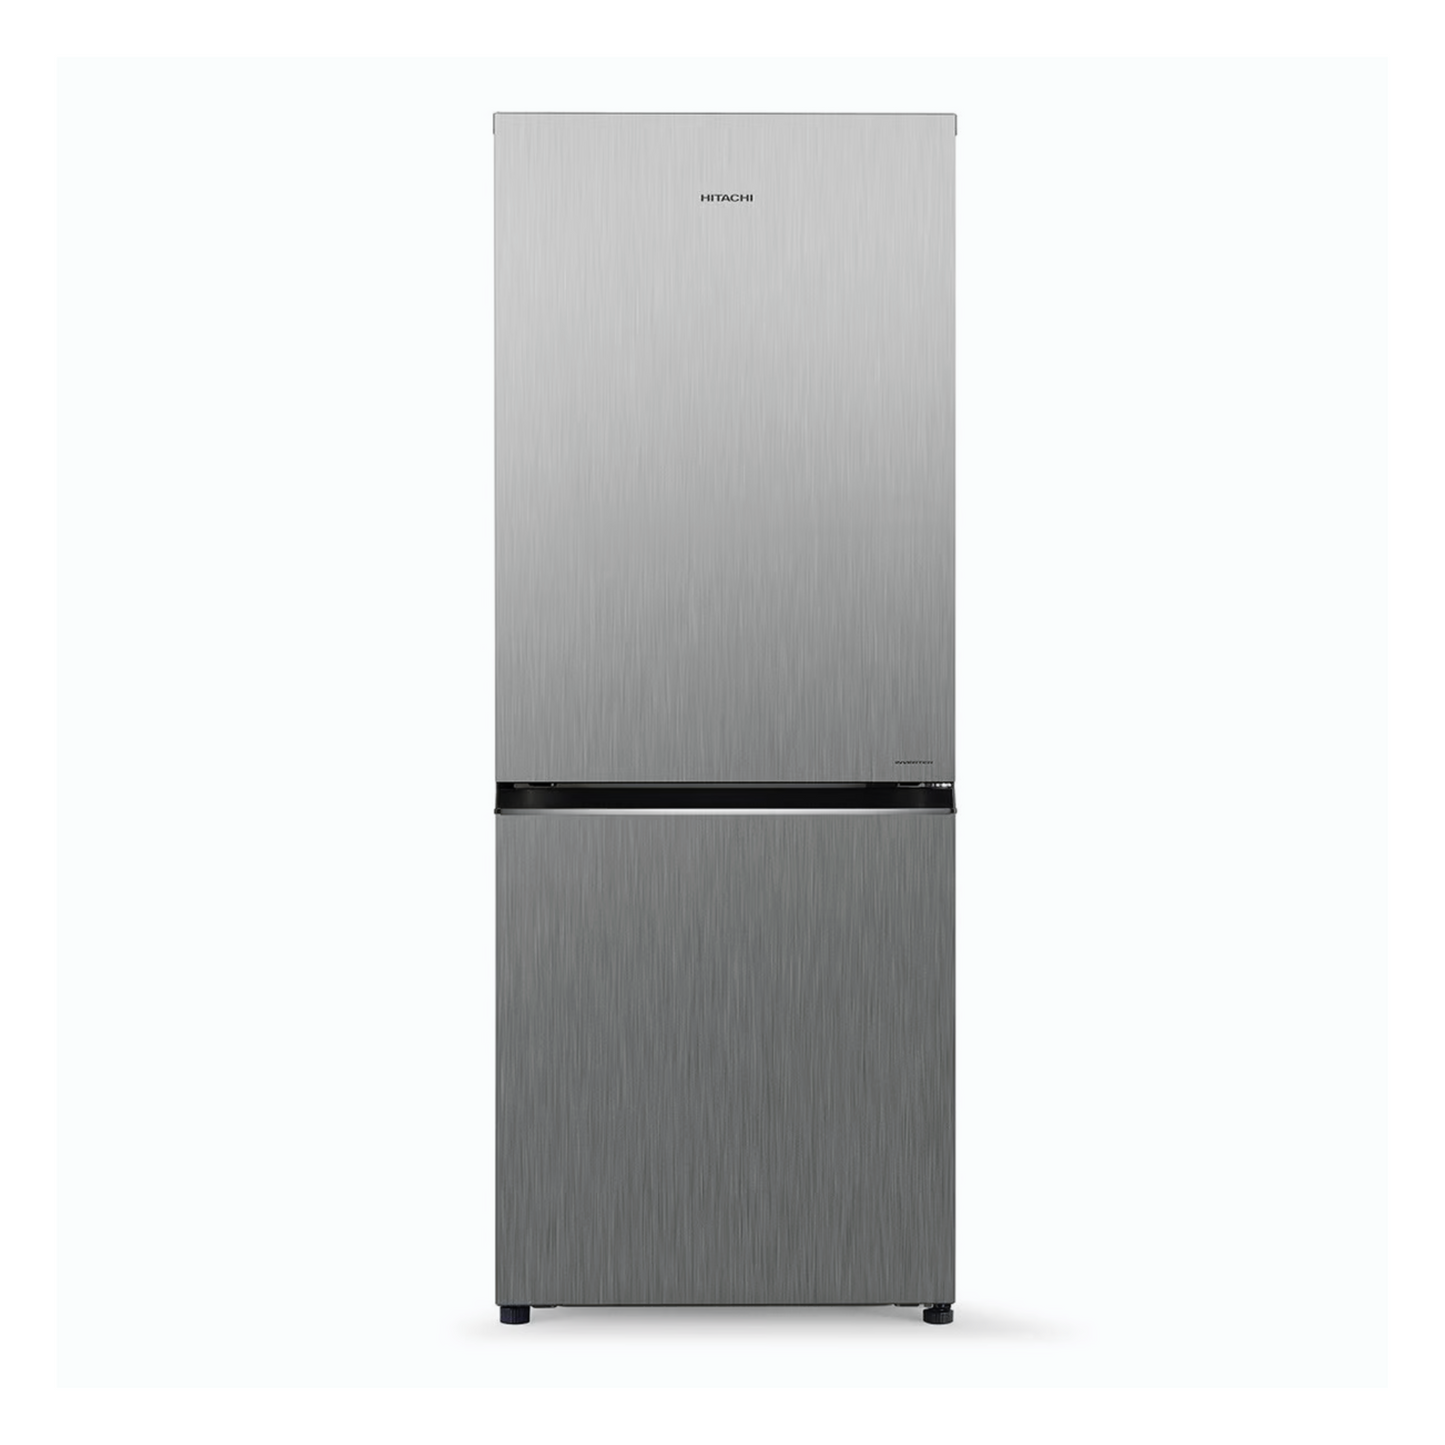 Hitachi 410L Double Door Refrigerator, RB410PUK6GBK